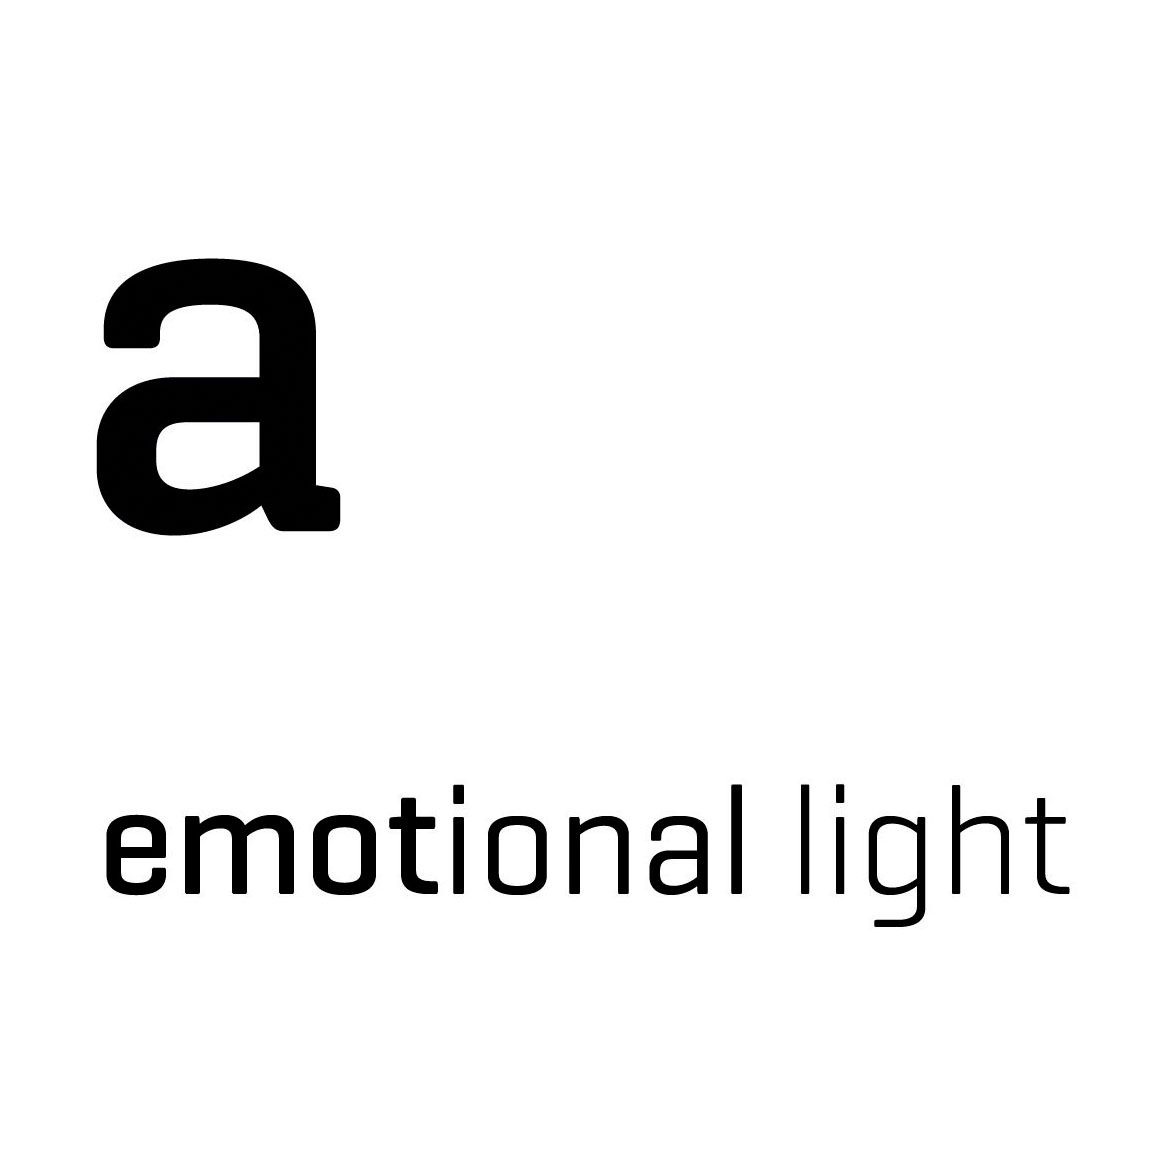 a emotional light